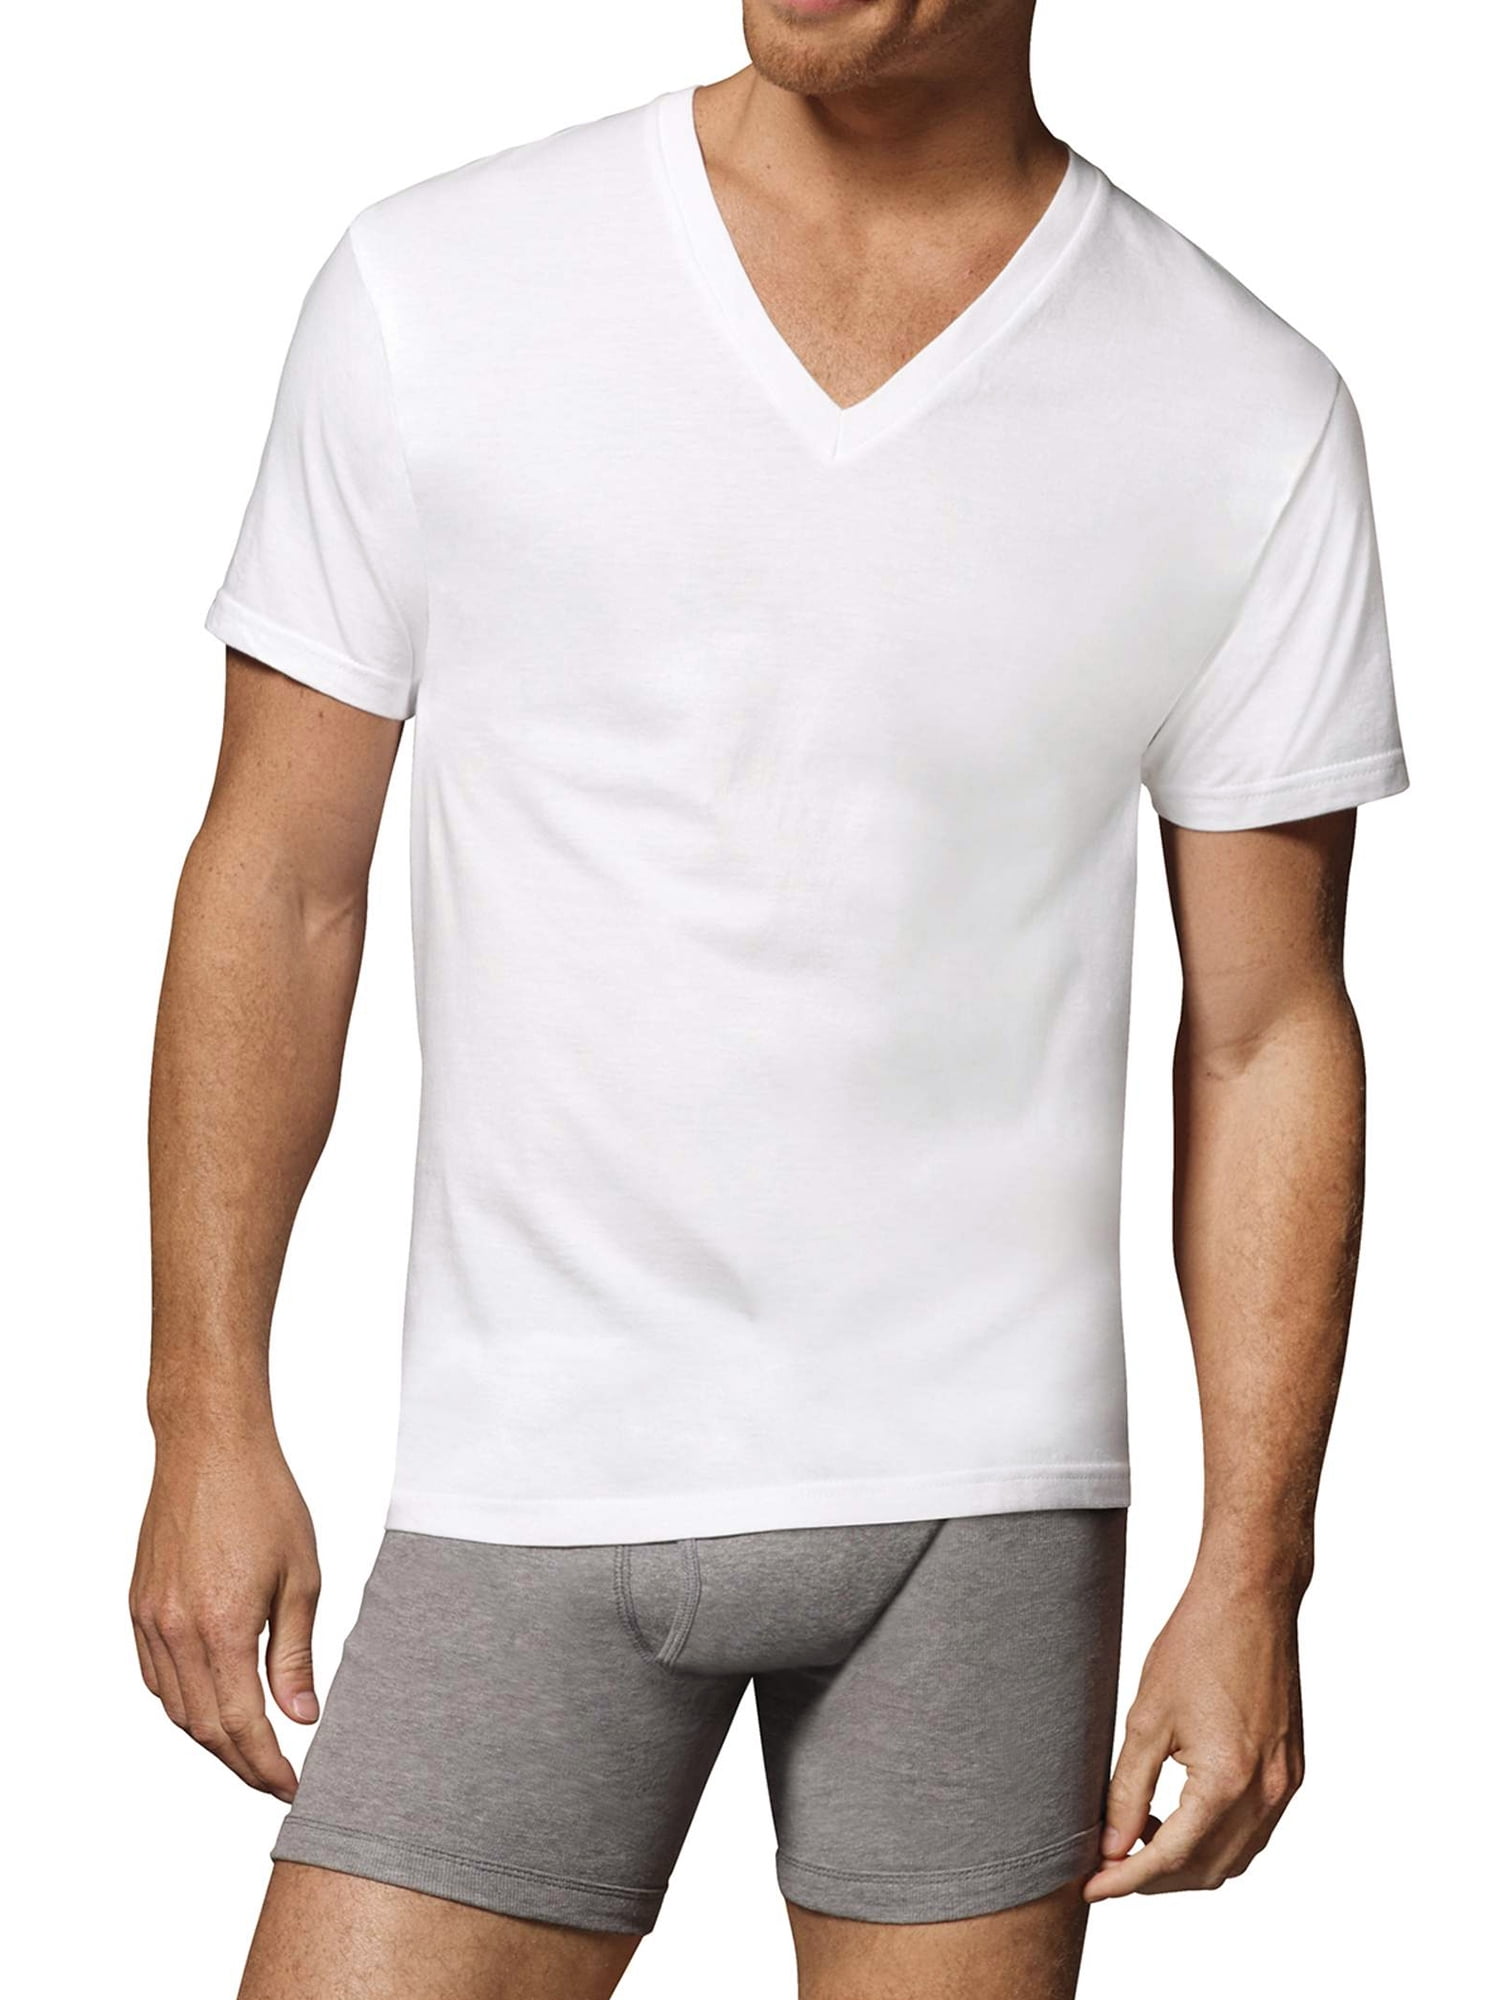 New 3-6 Pack Mens 100% Cotton Crew& V-Neck Tagless T-Shirt Undershirt White S-XL 